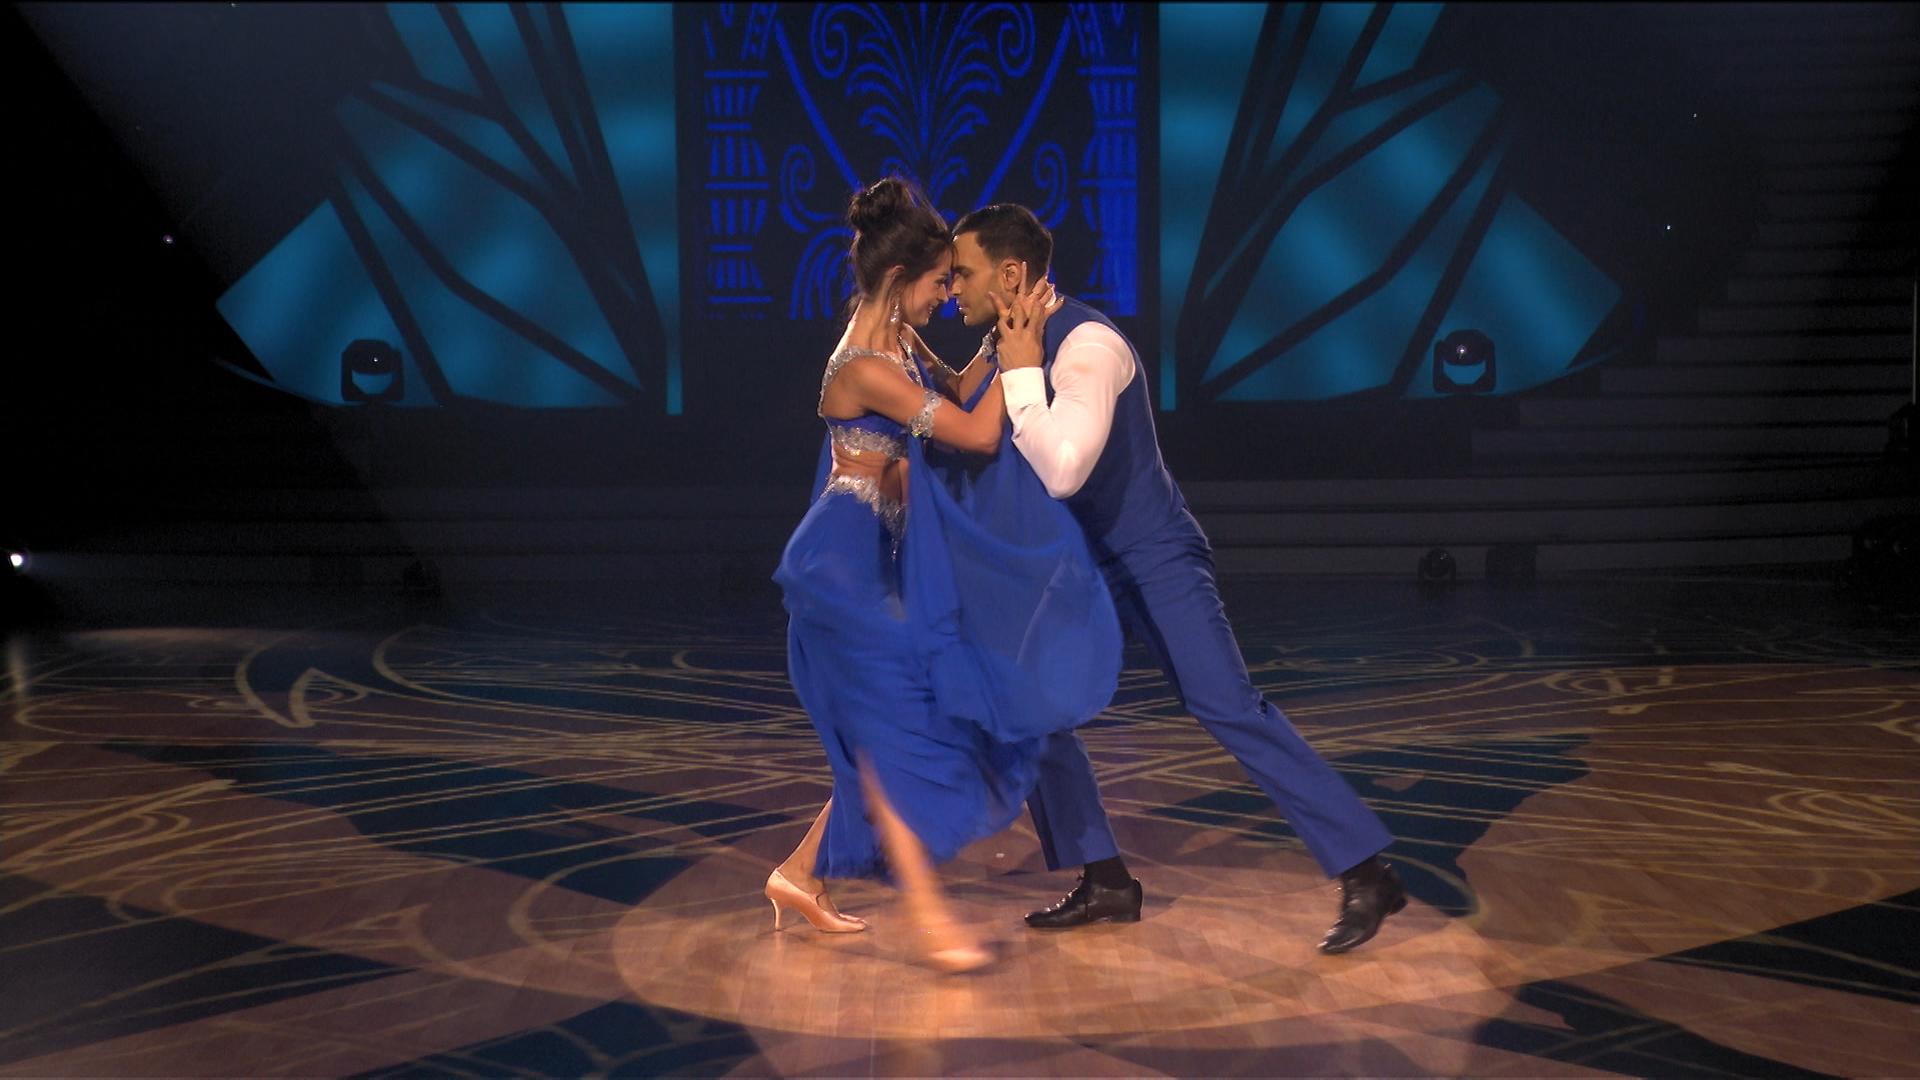 Timur Ülker & Malika Dzumaev kommen sich sehr nah Quickstep bei "Let's Dance"